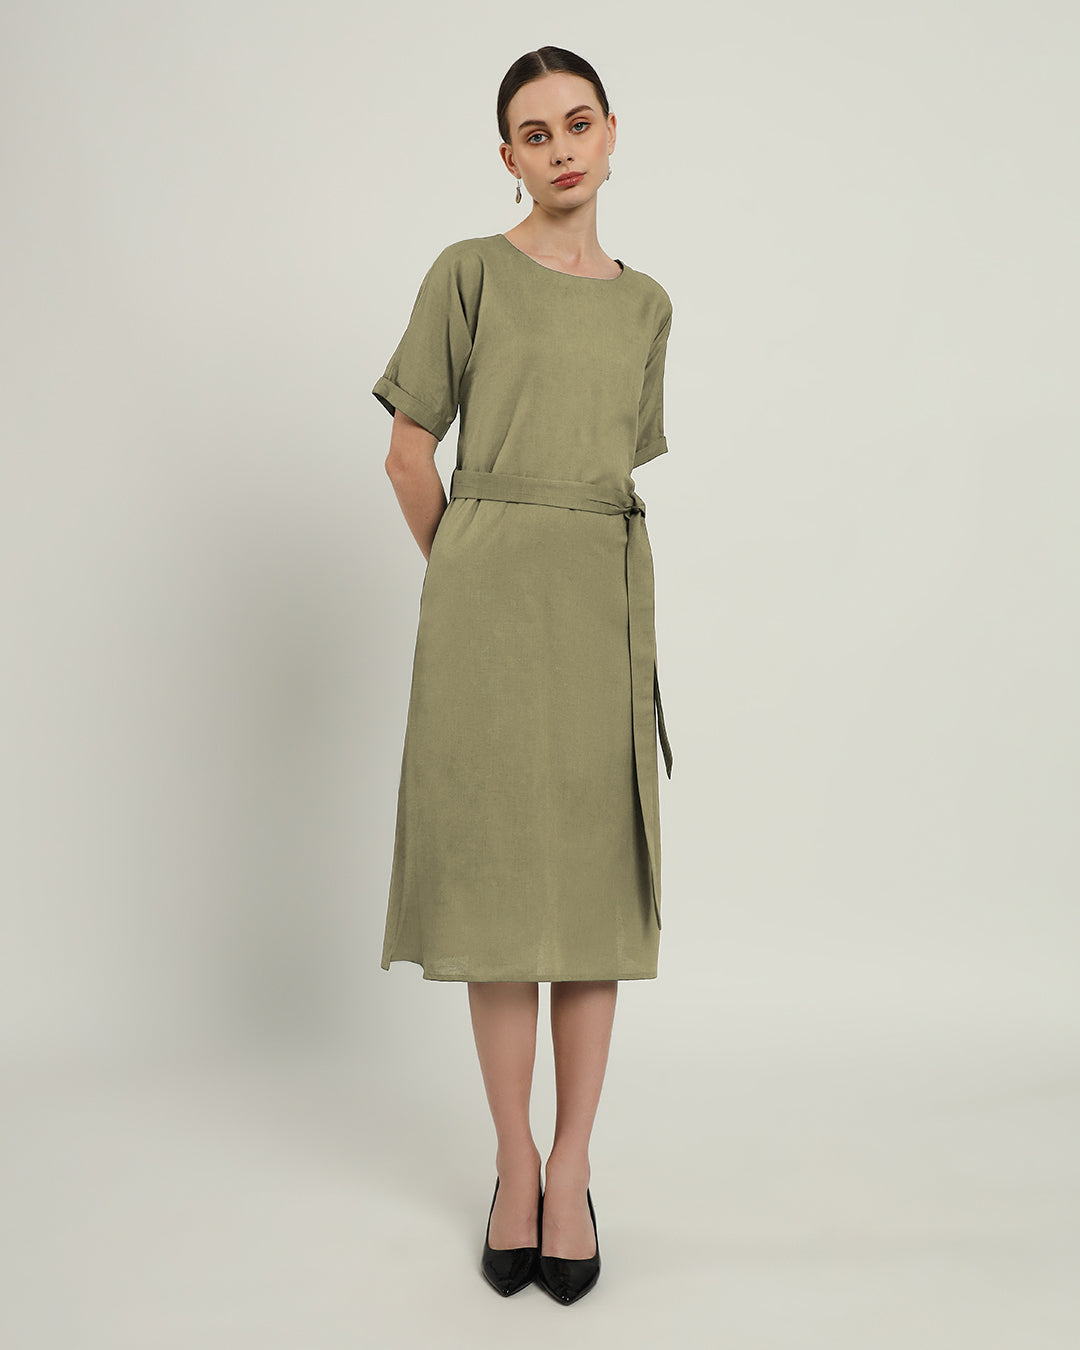 The Tayma Daisy Olive Linen Dress